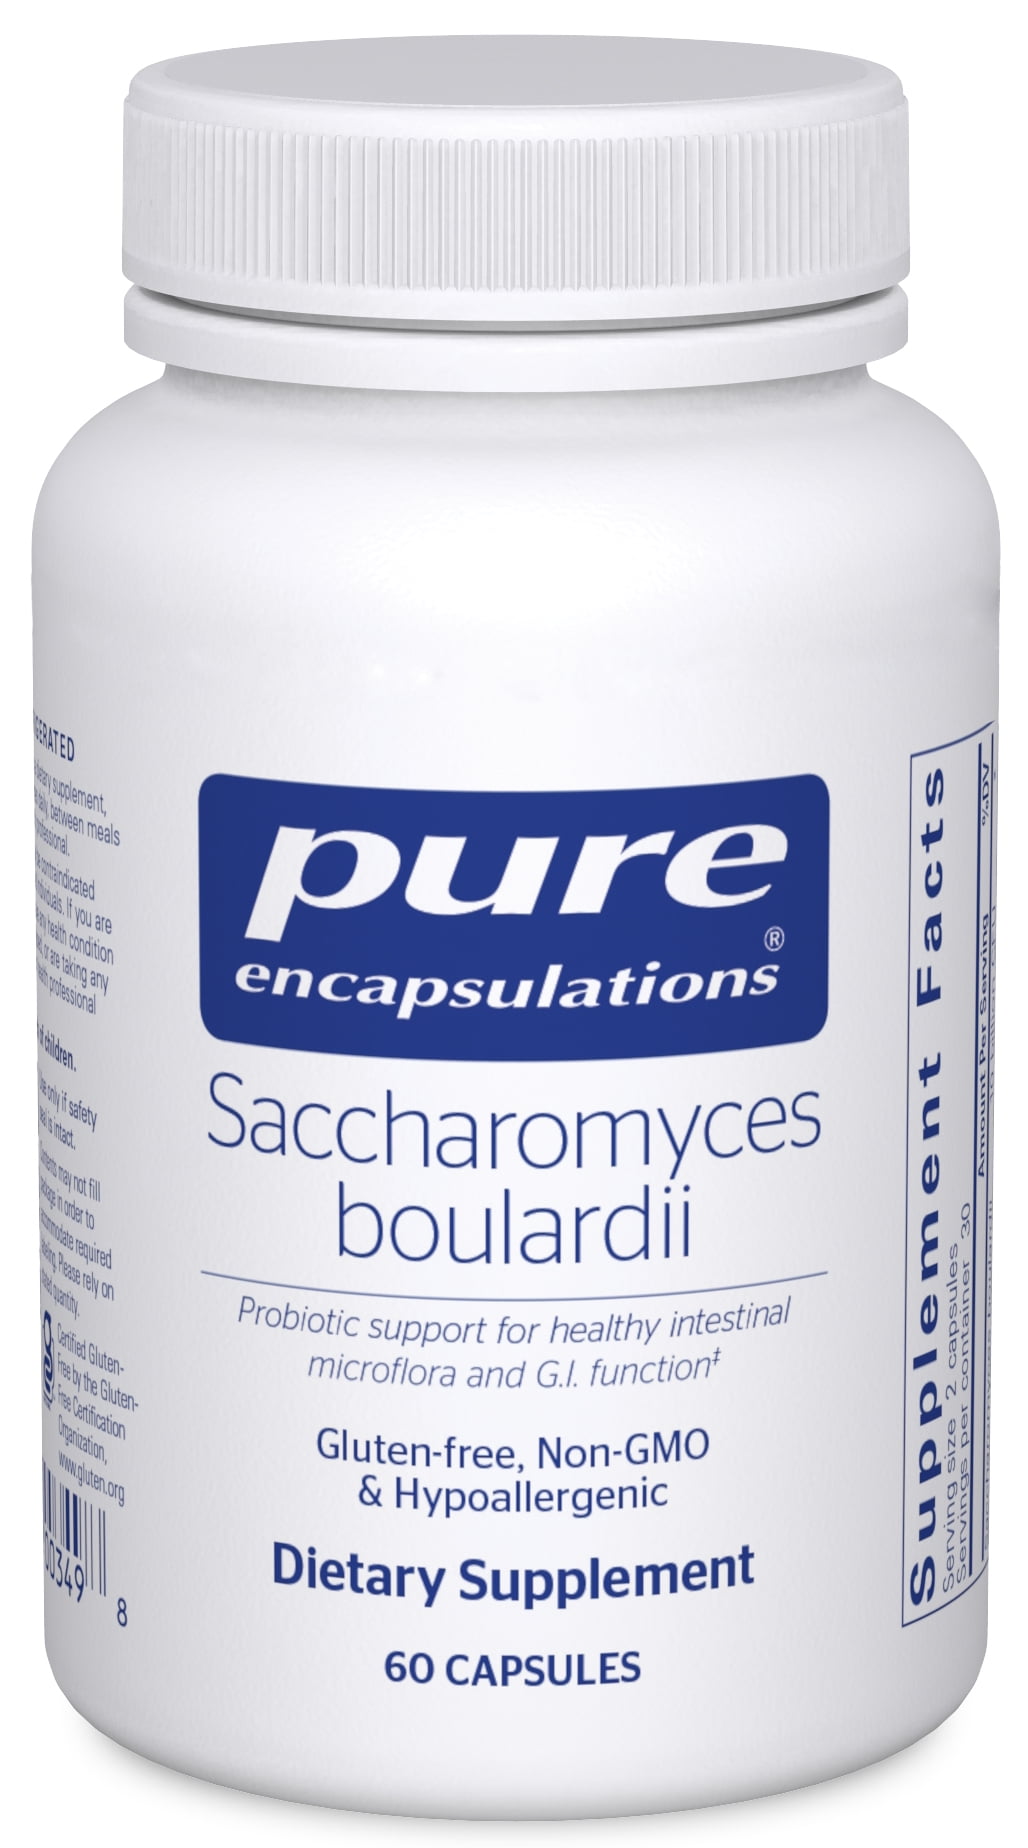 Saccharomyces boulardii capsule 60 count